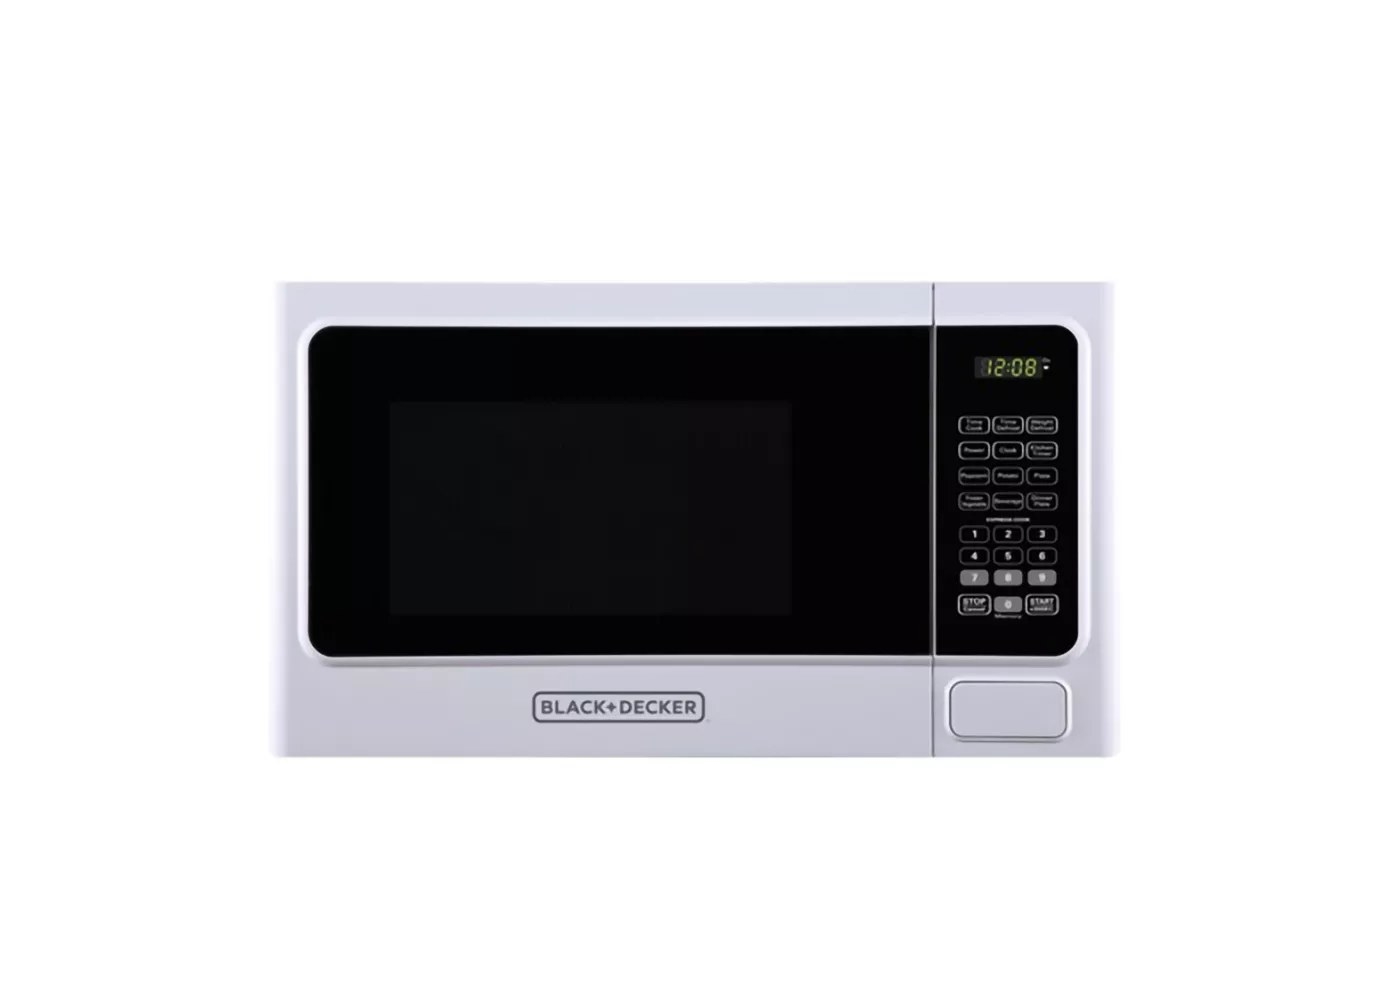 The white Black+Decker microwave